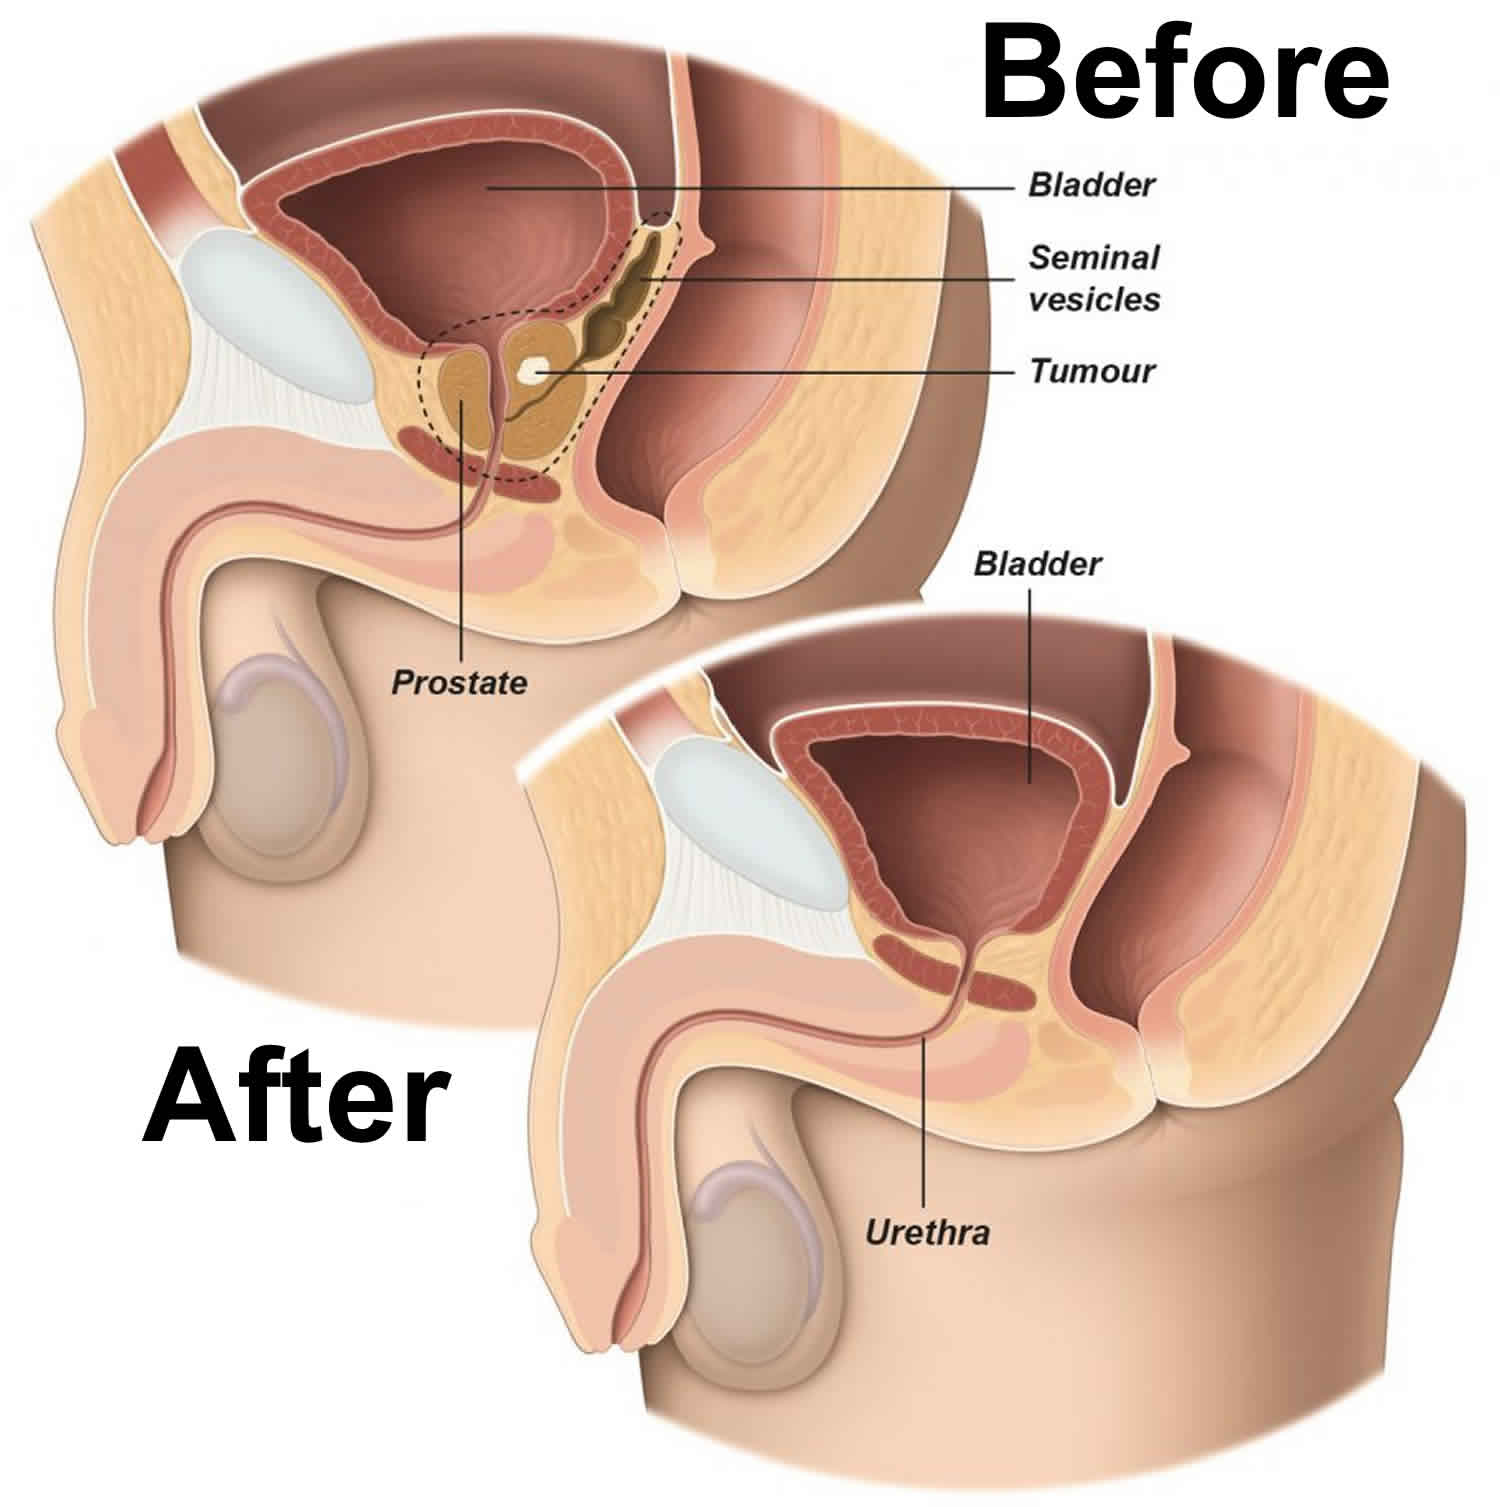 Results of penile rehabilitation with avanafil after laparoscopic radical prostatectomy